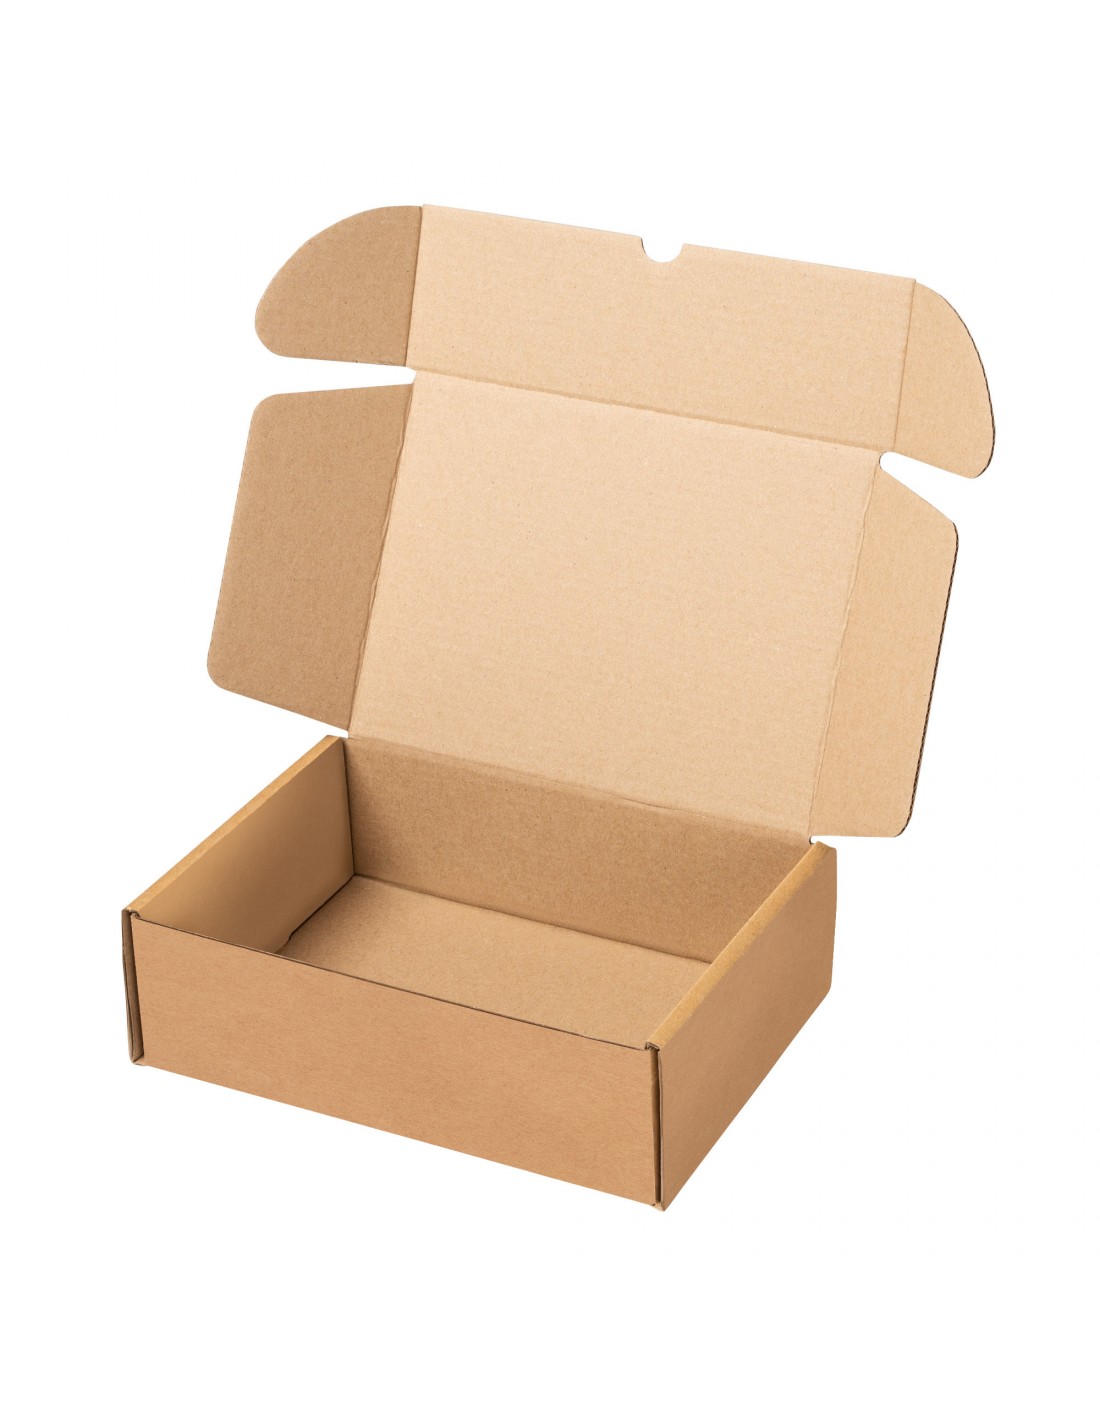 para envíos ecommerce automontables kraft packaging 29 x 16 x 8.5 cm, Pack 50 cajas cartón medianas envio postal regalos Pack cajas paqueteria Ideal ecomerce. almacenaje 